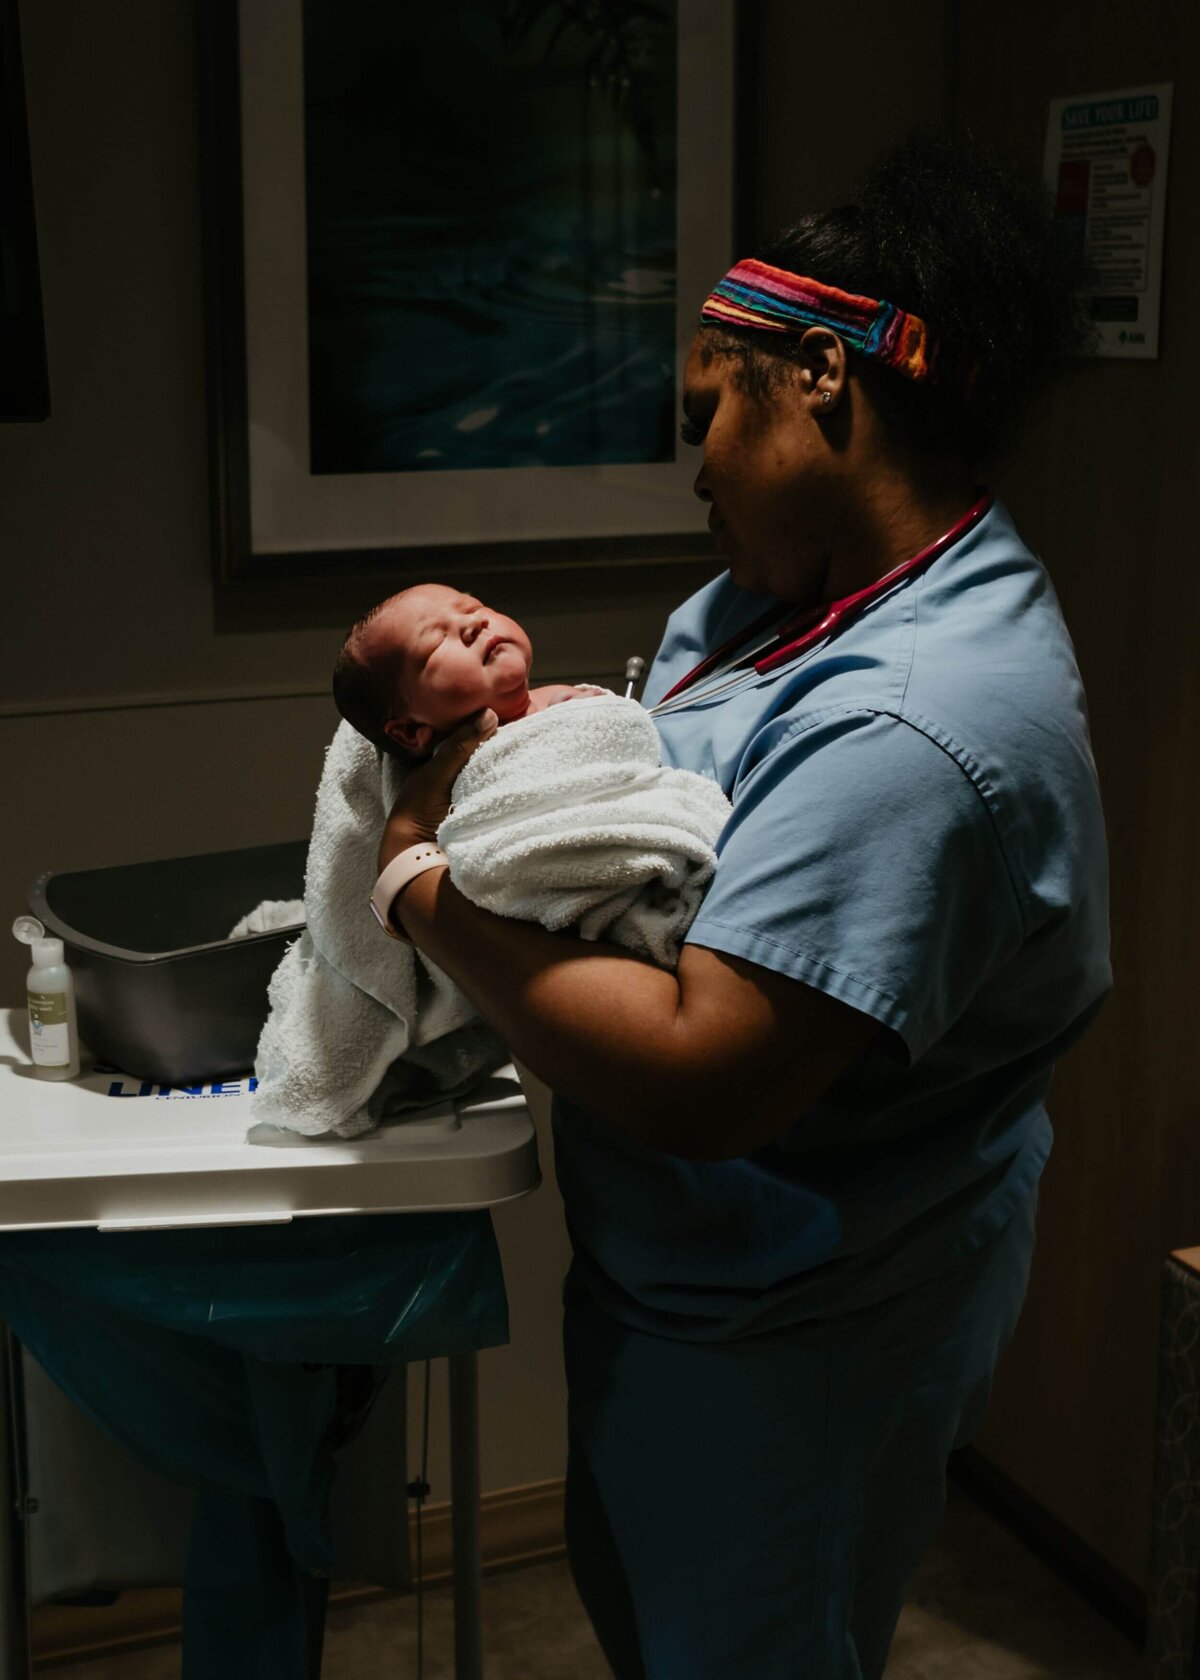 A nurse lovingly cradles a newborn in a hospital room.